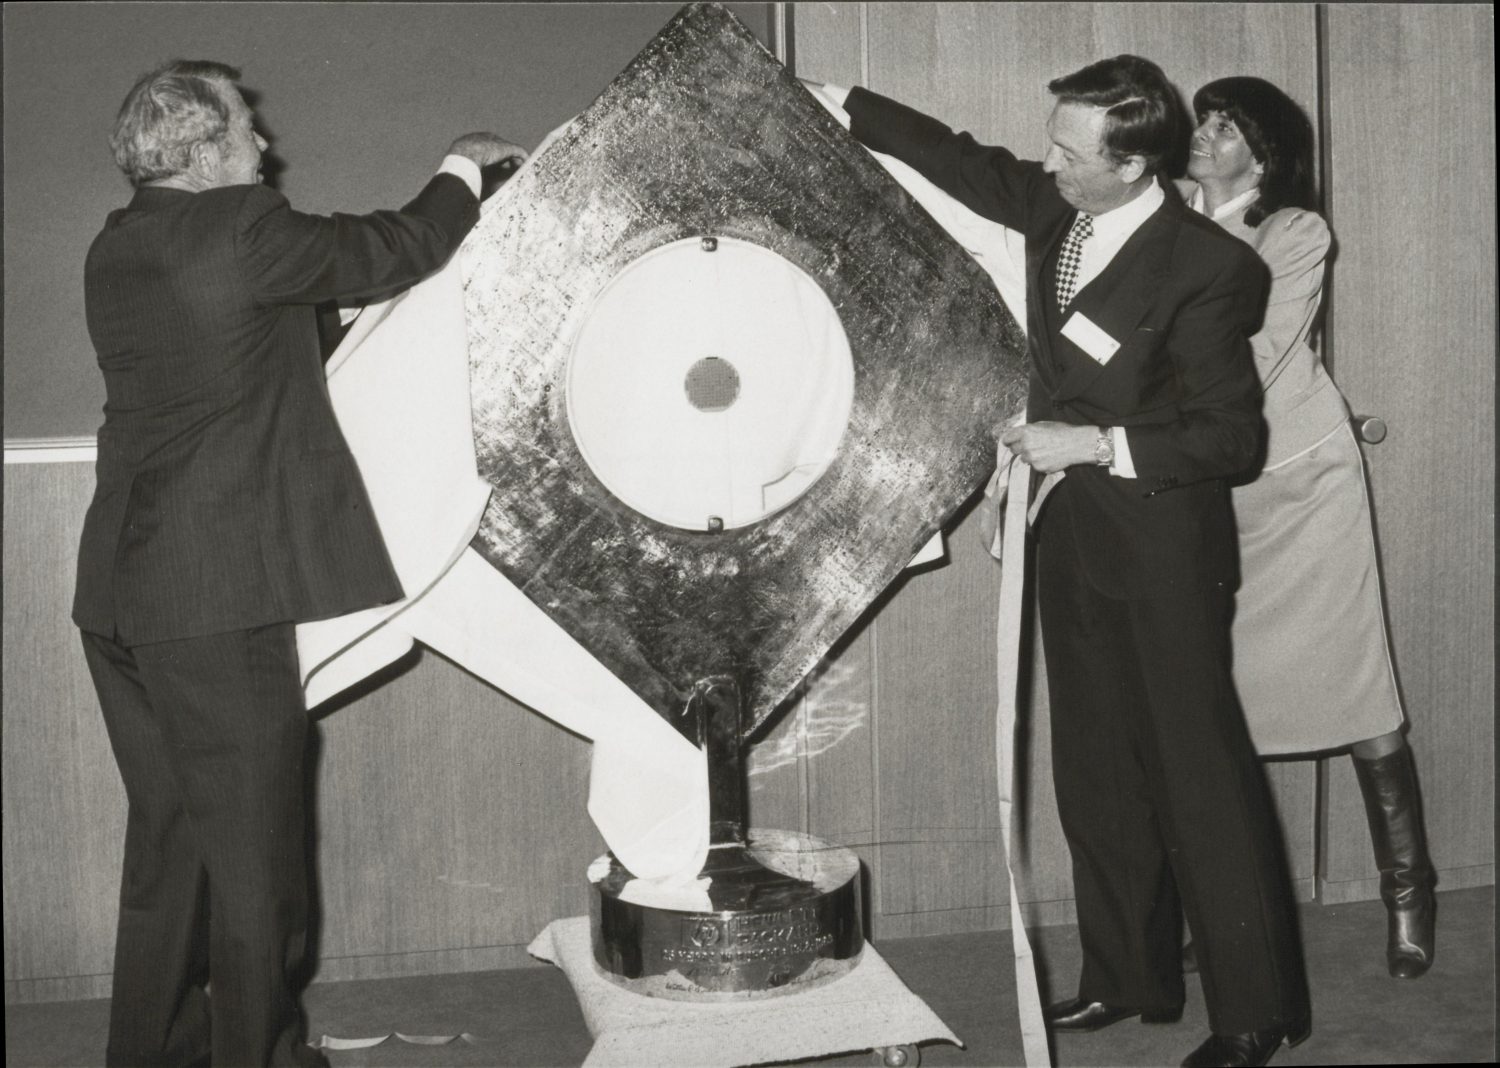 Bill Hewlett helping to unveil a sculpture to celebrate Hewlett-Packard SA's 25th anniversary in 1983.